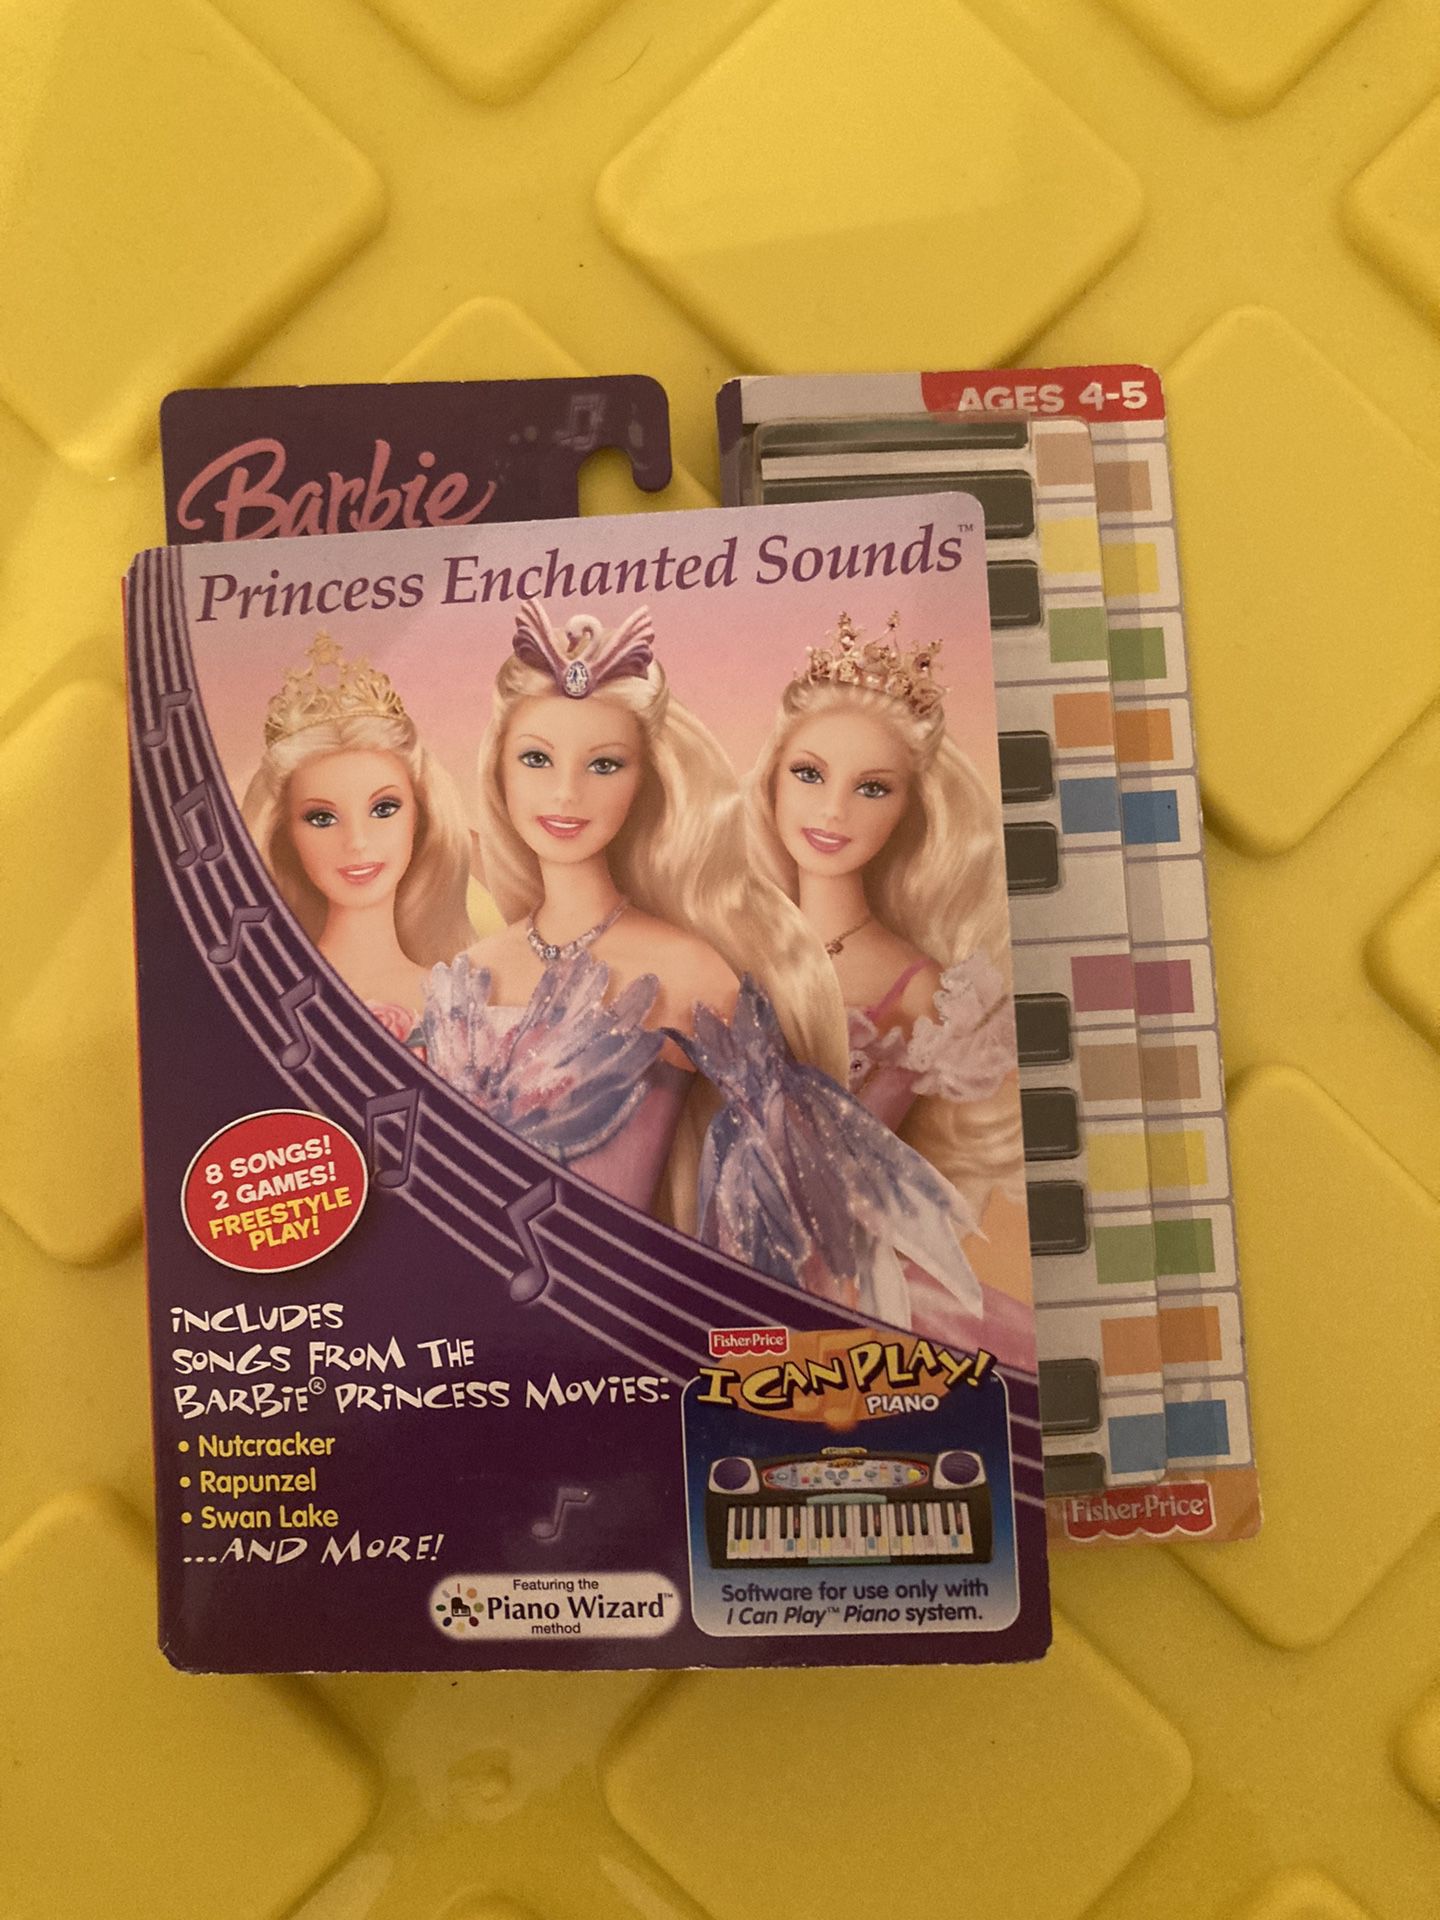 I Can Play Piano Software - Princess Enchanted Sounds Barbie